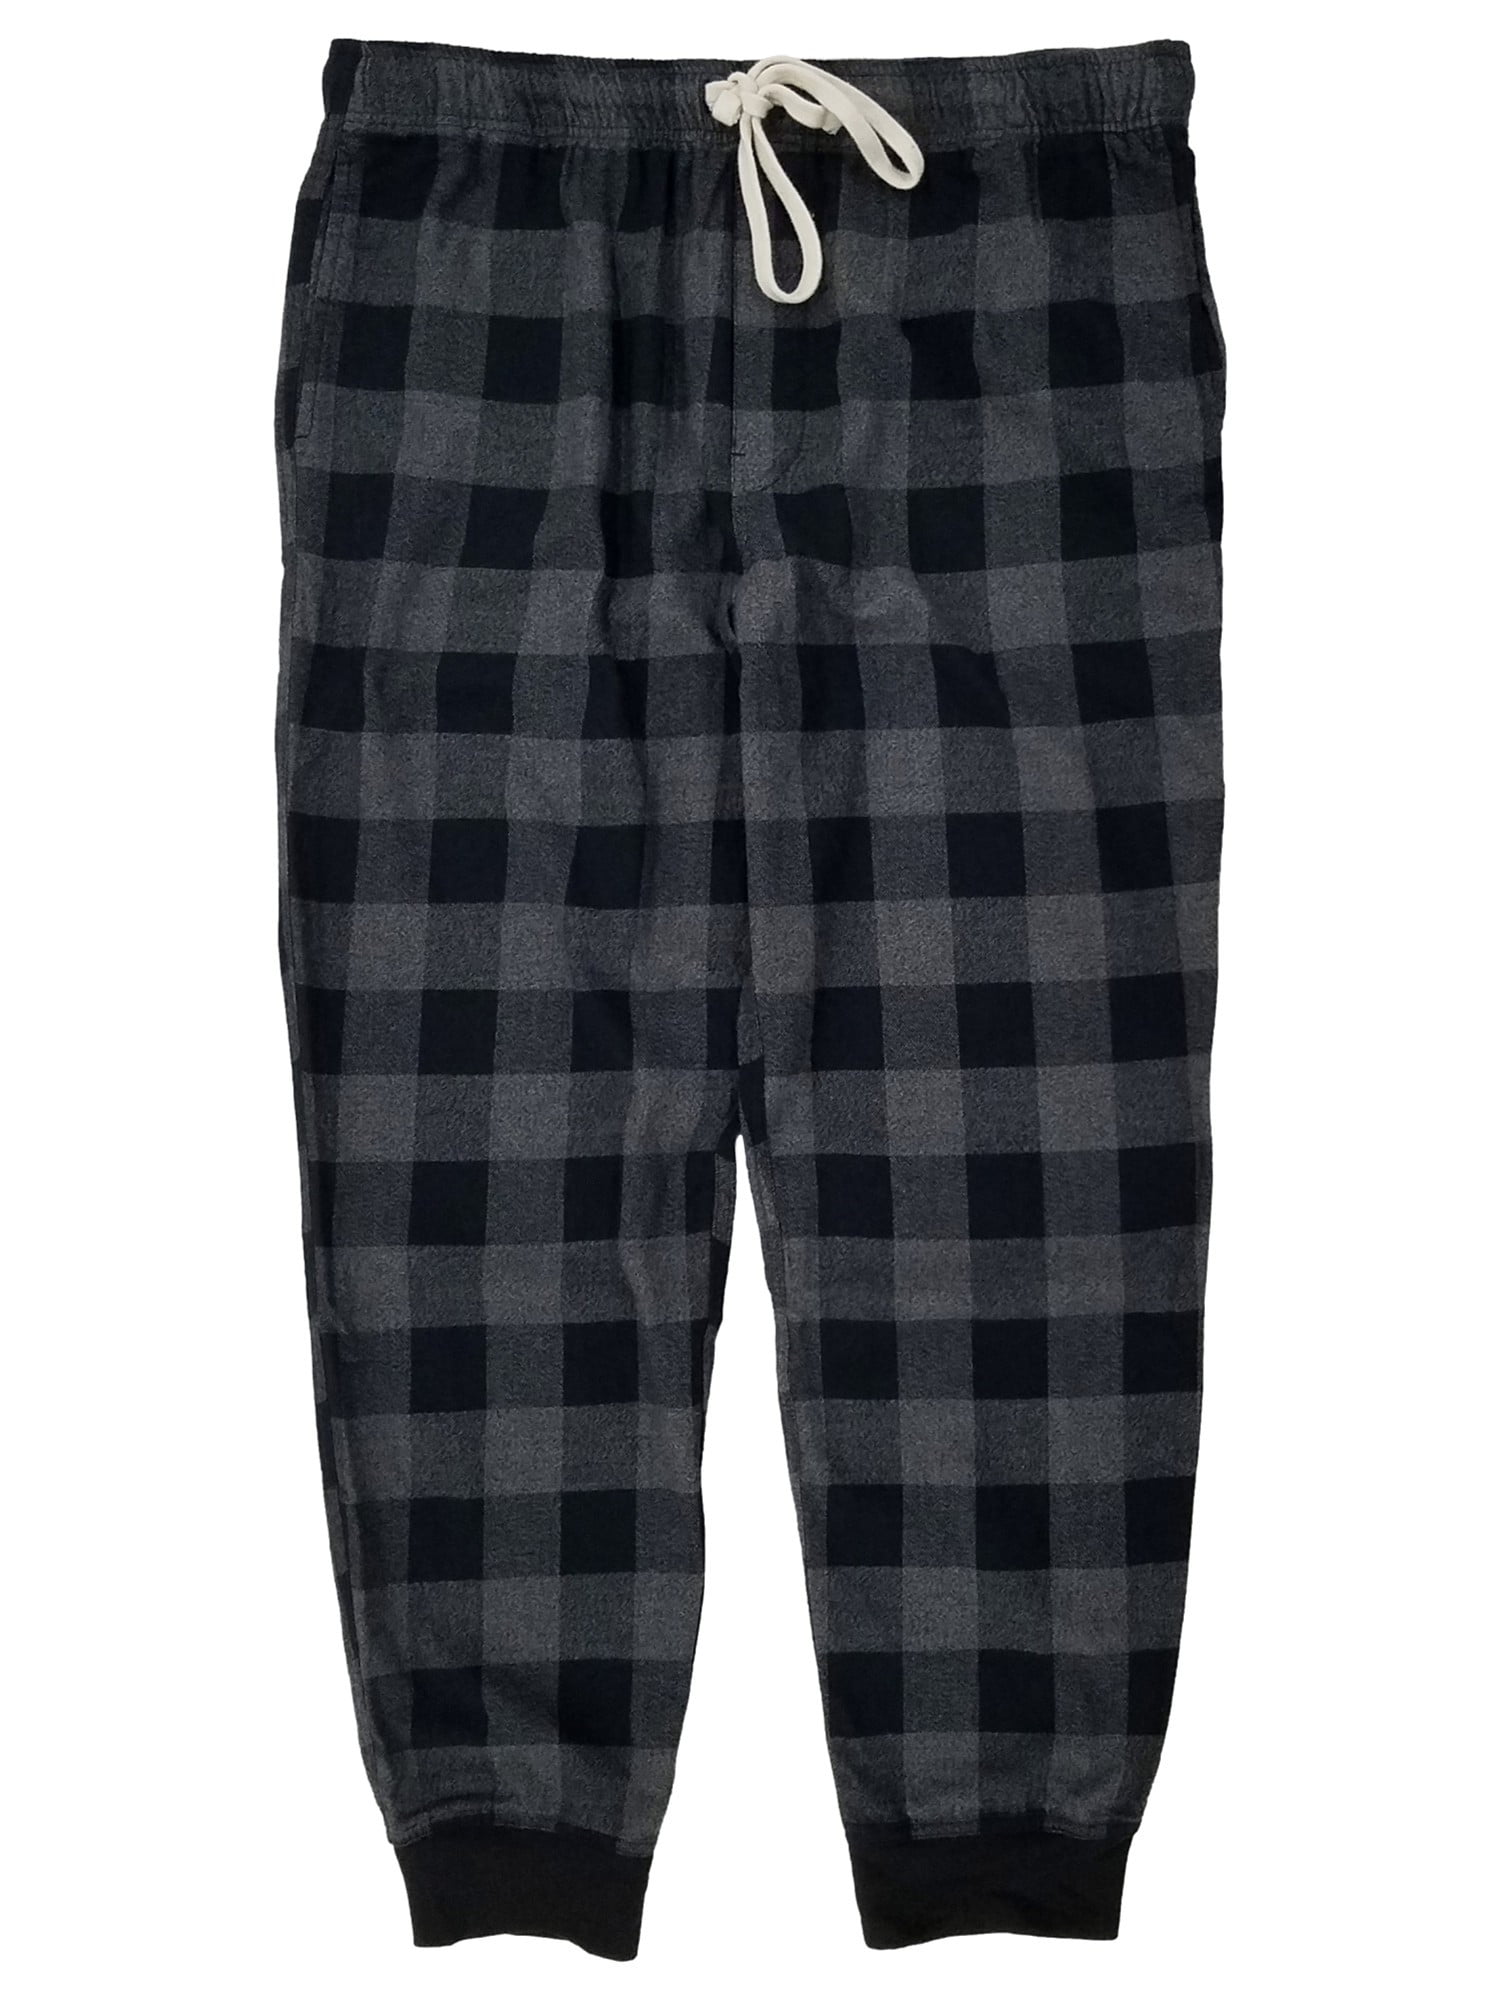 Mens Black & Gray Buffalo Plaid Flannel Jogger Sleep Pants Pajama